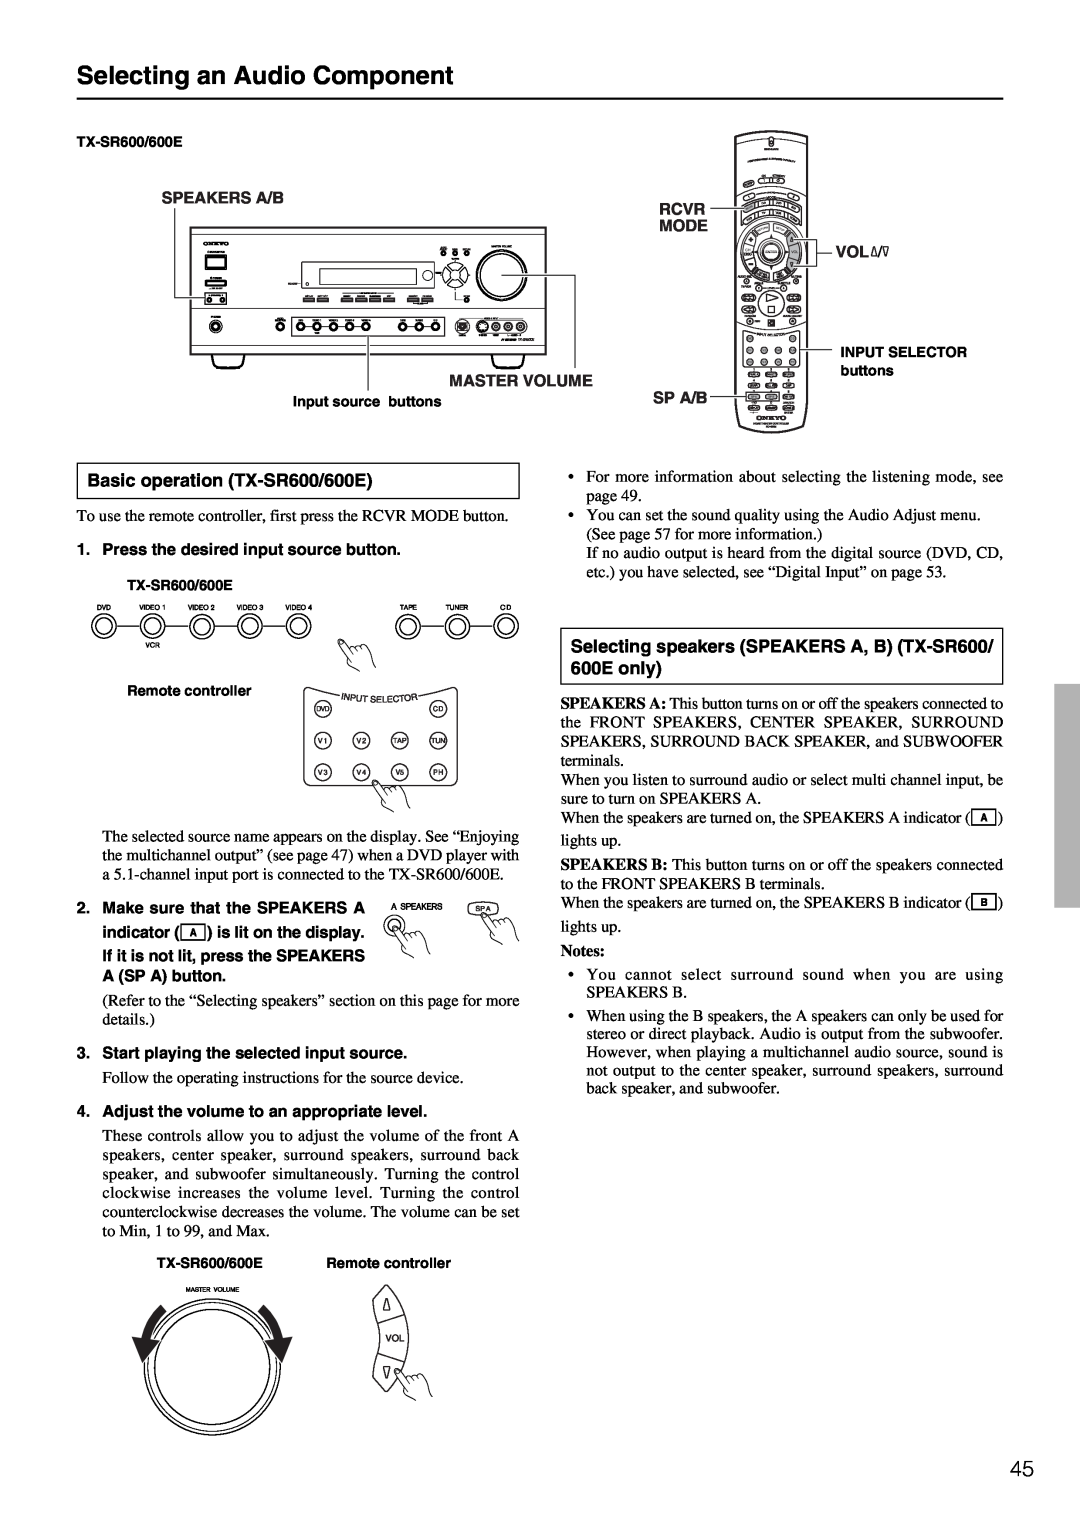 Onkyo TX-SR700/700E instruction manual Selecting an Audio Component, Basic operation TX-SR600/600E, Notes 